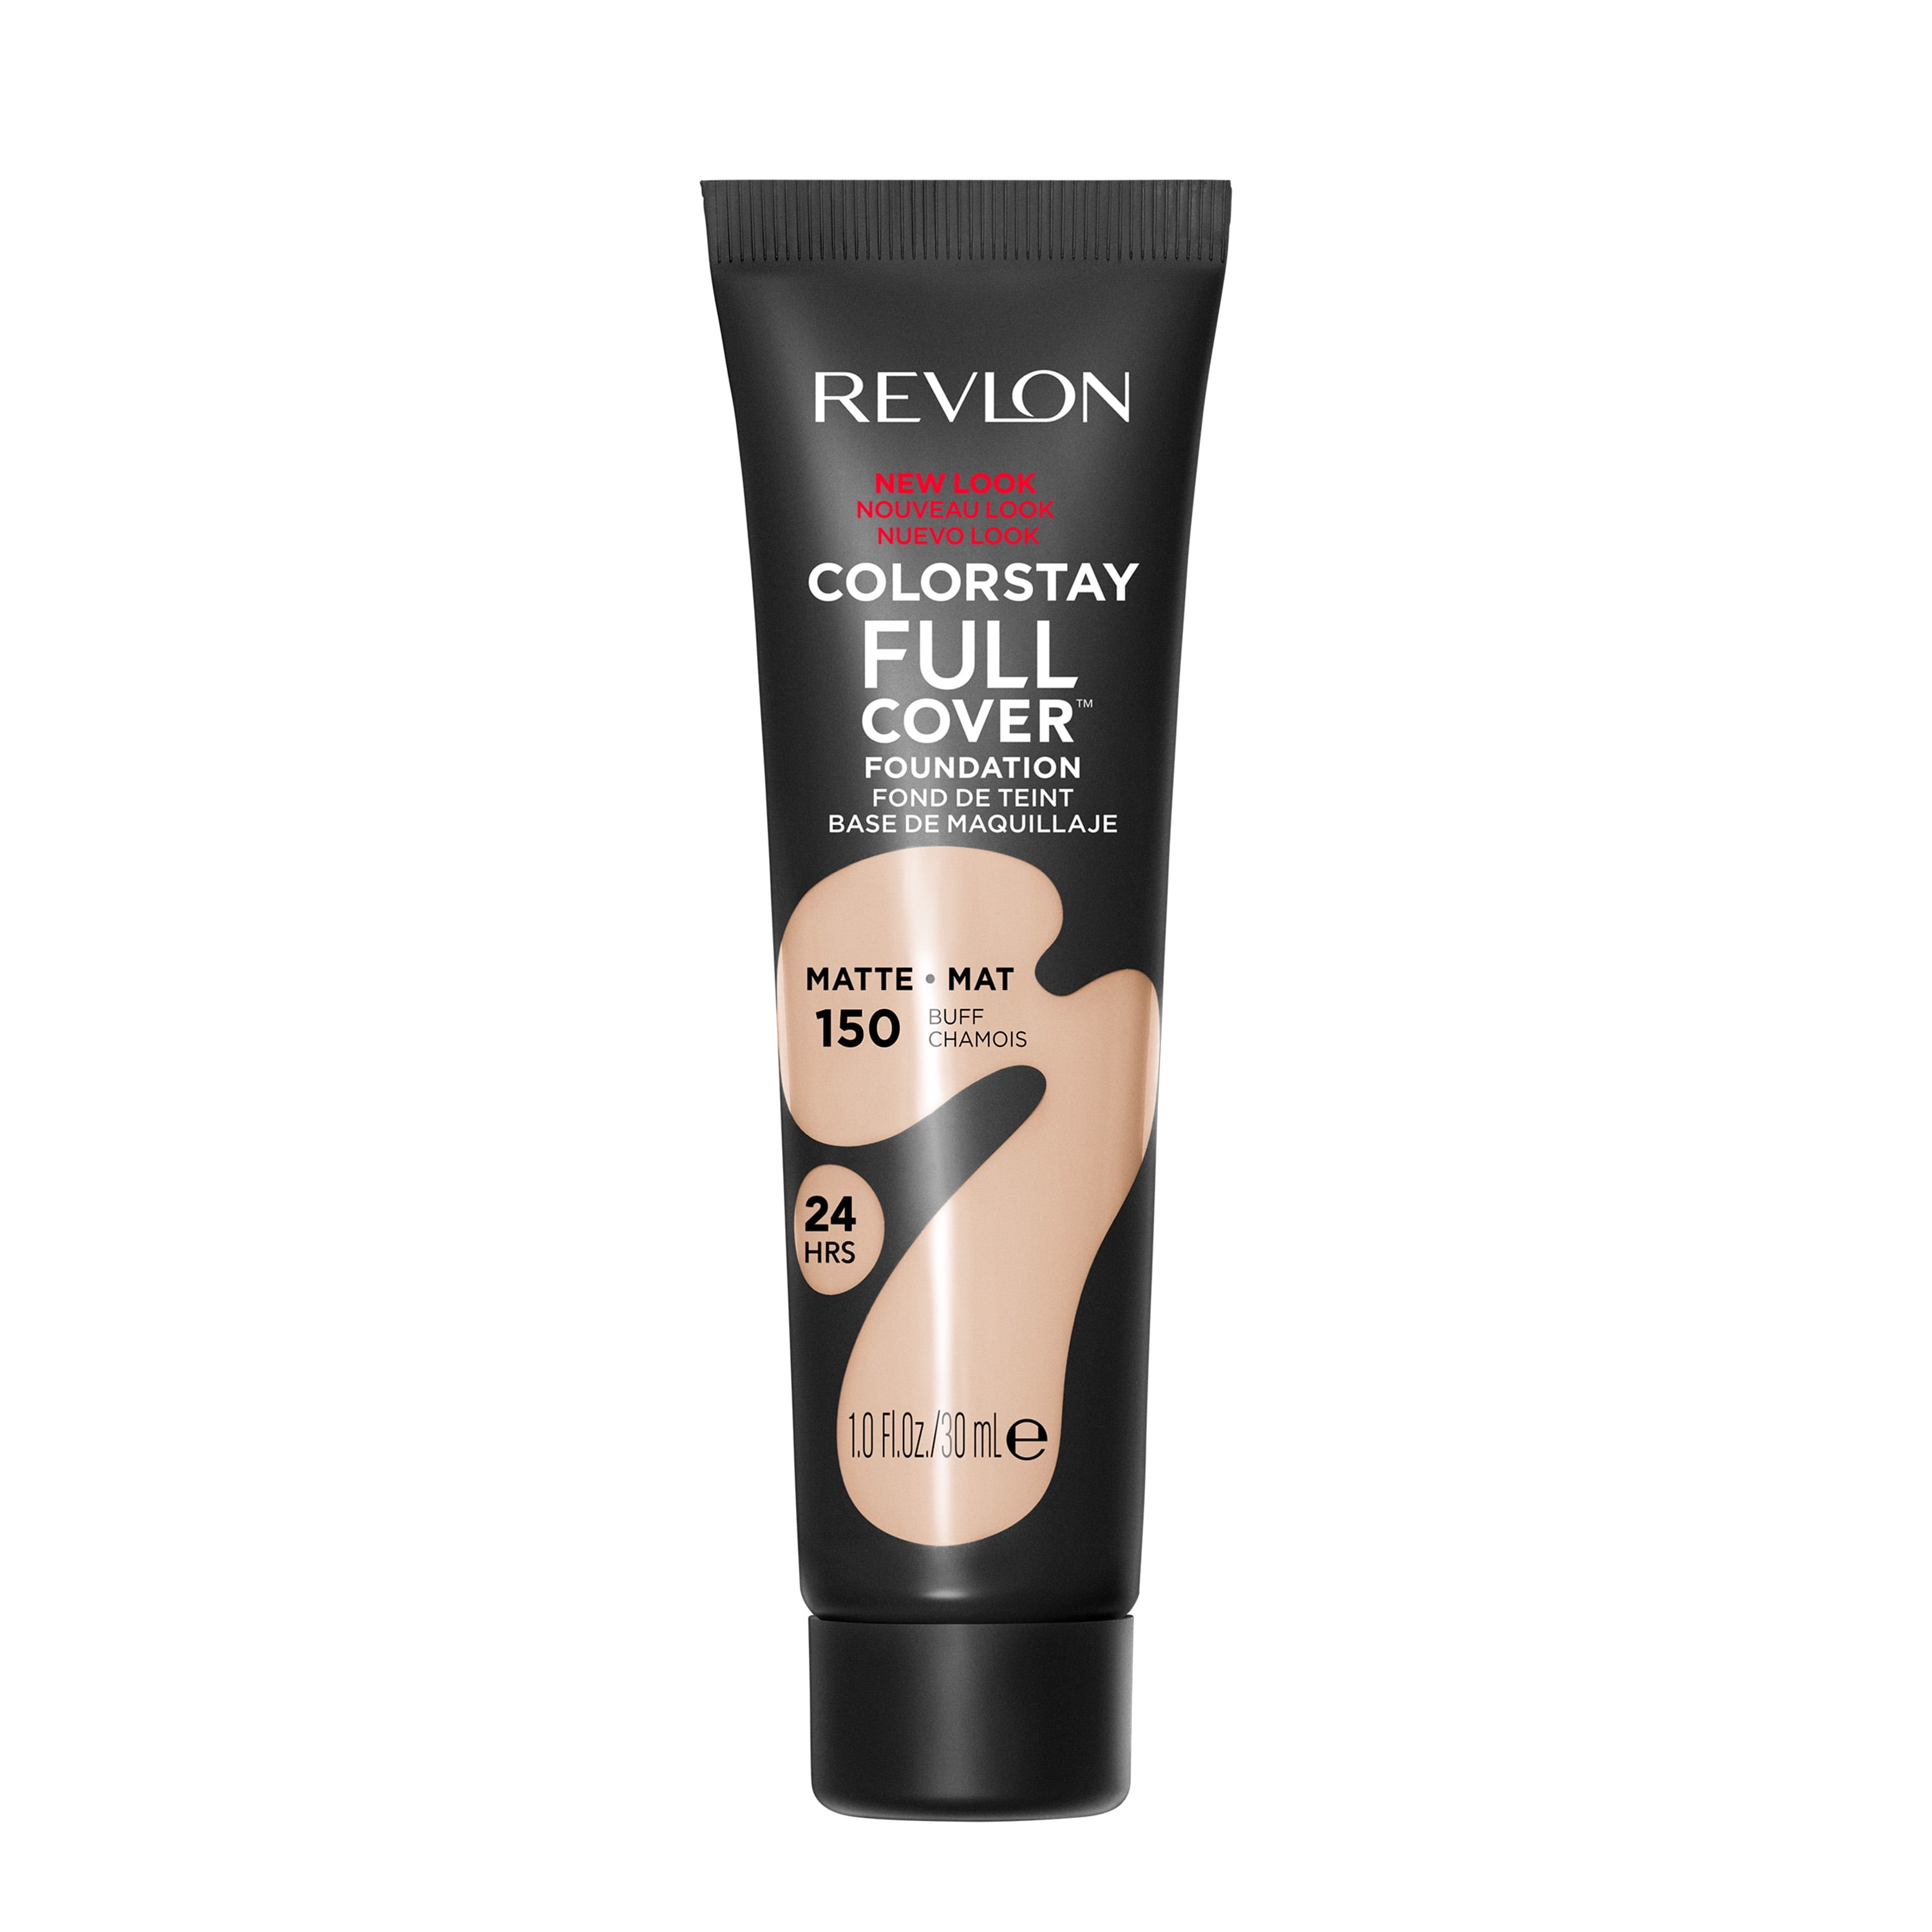 Revlon ColorStay Full Cover Longwear Matte Foundation, Heat & Sweat Resistant Lightweight Face Makeup, 150 Buff, 1.0 fl oz